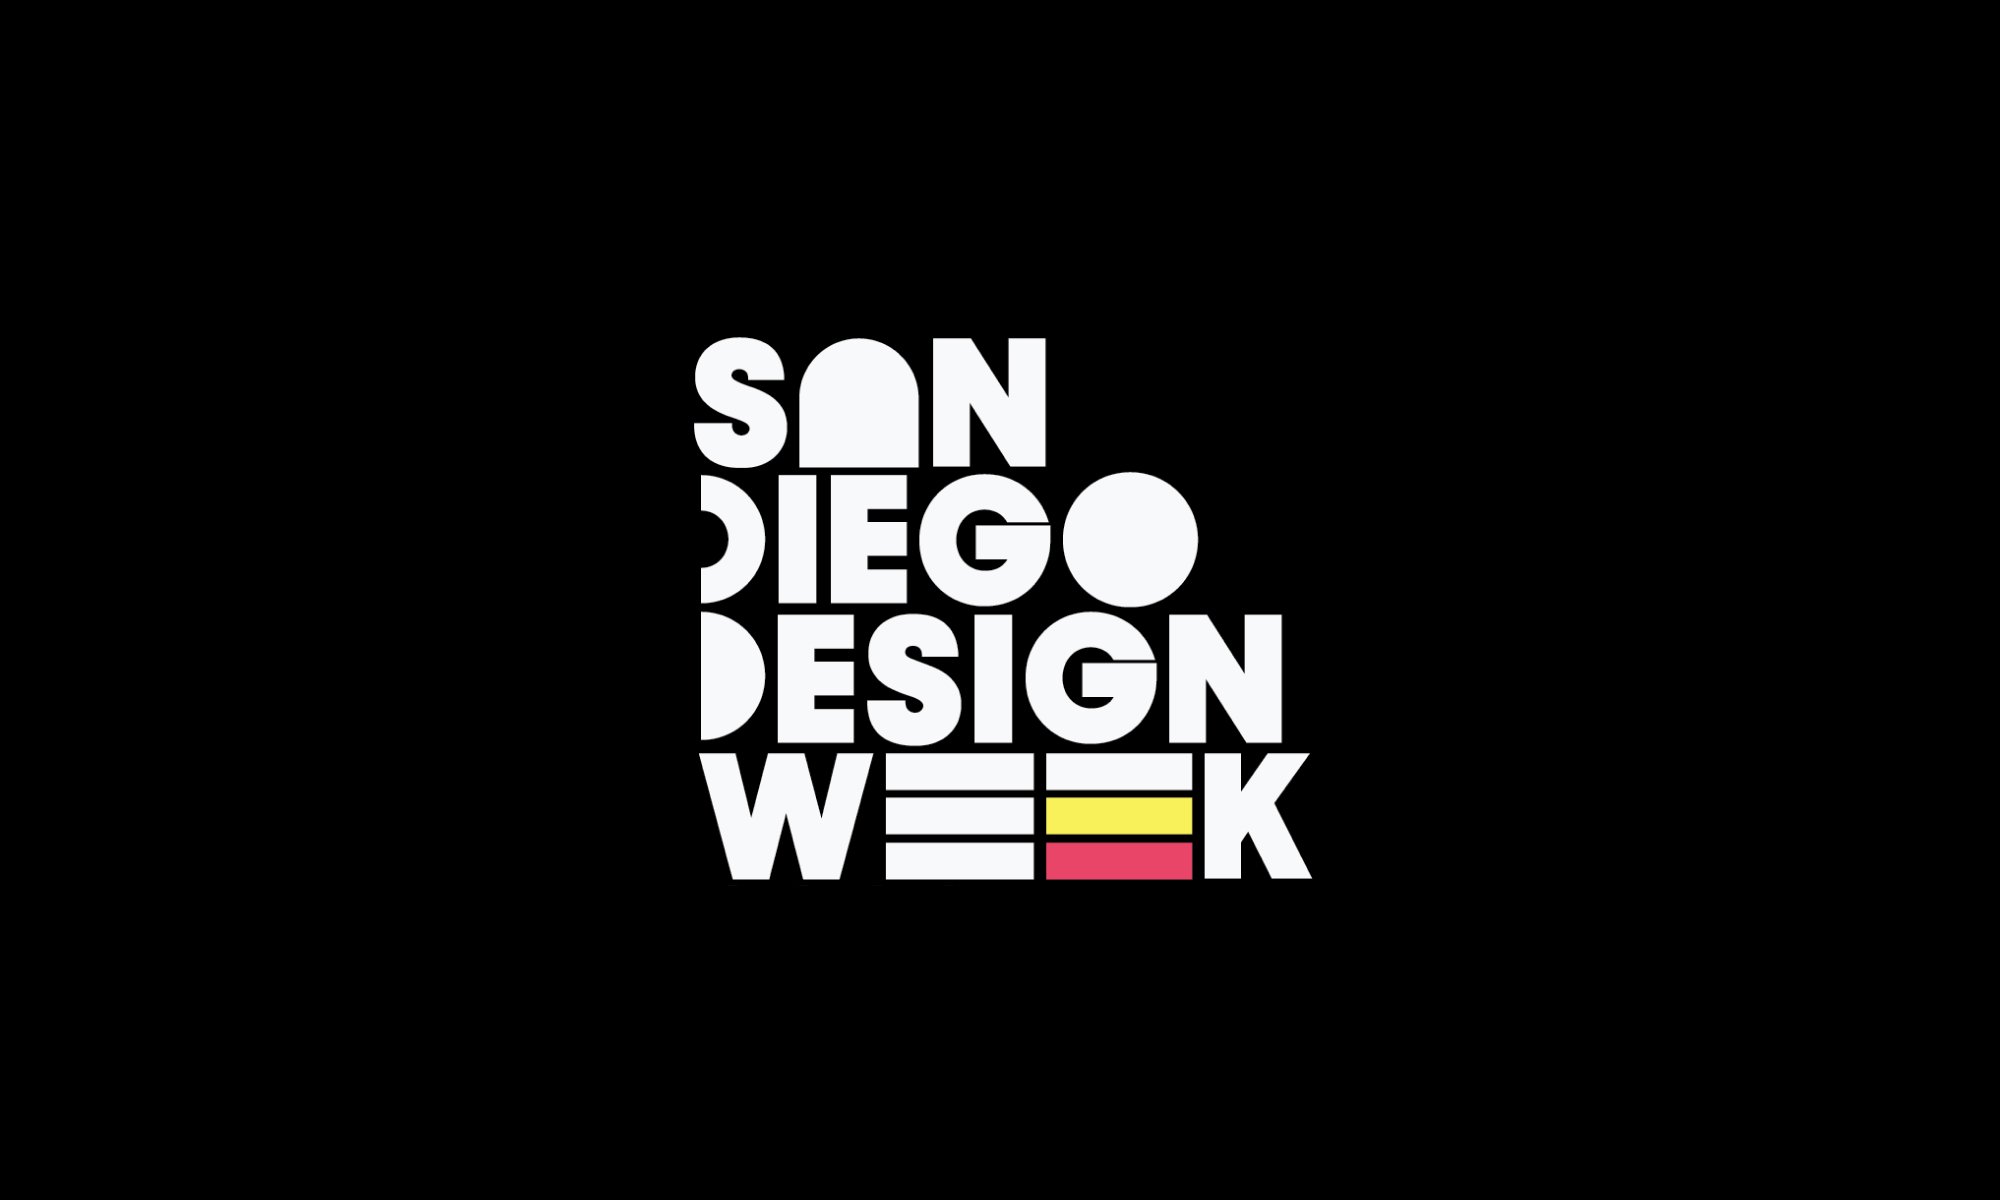 San Diego Design Week logo on a black background